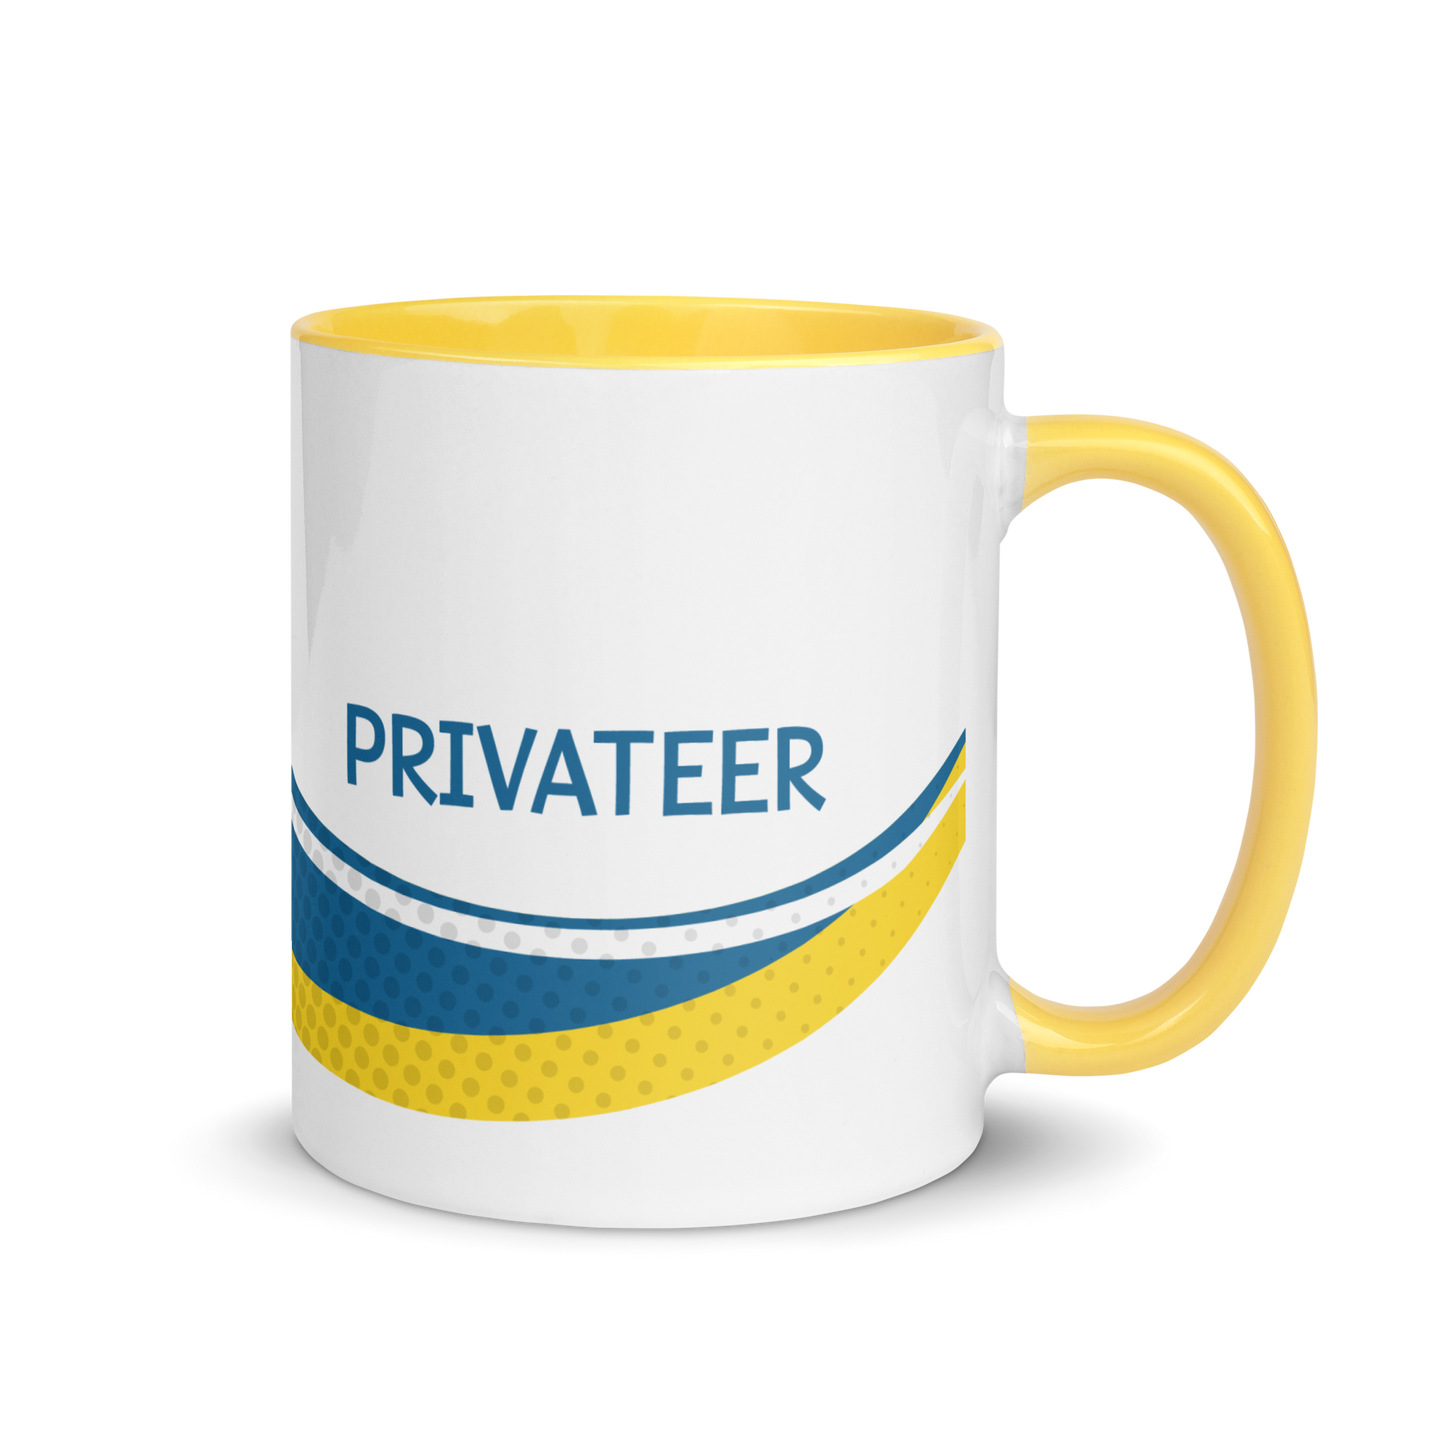 Pirate101-Privateer-Mug2-ceramic-coffee